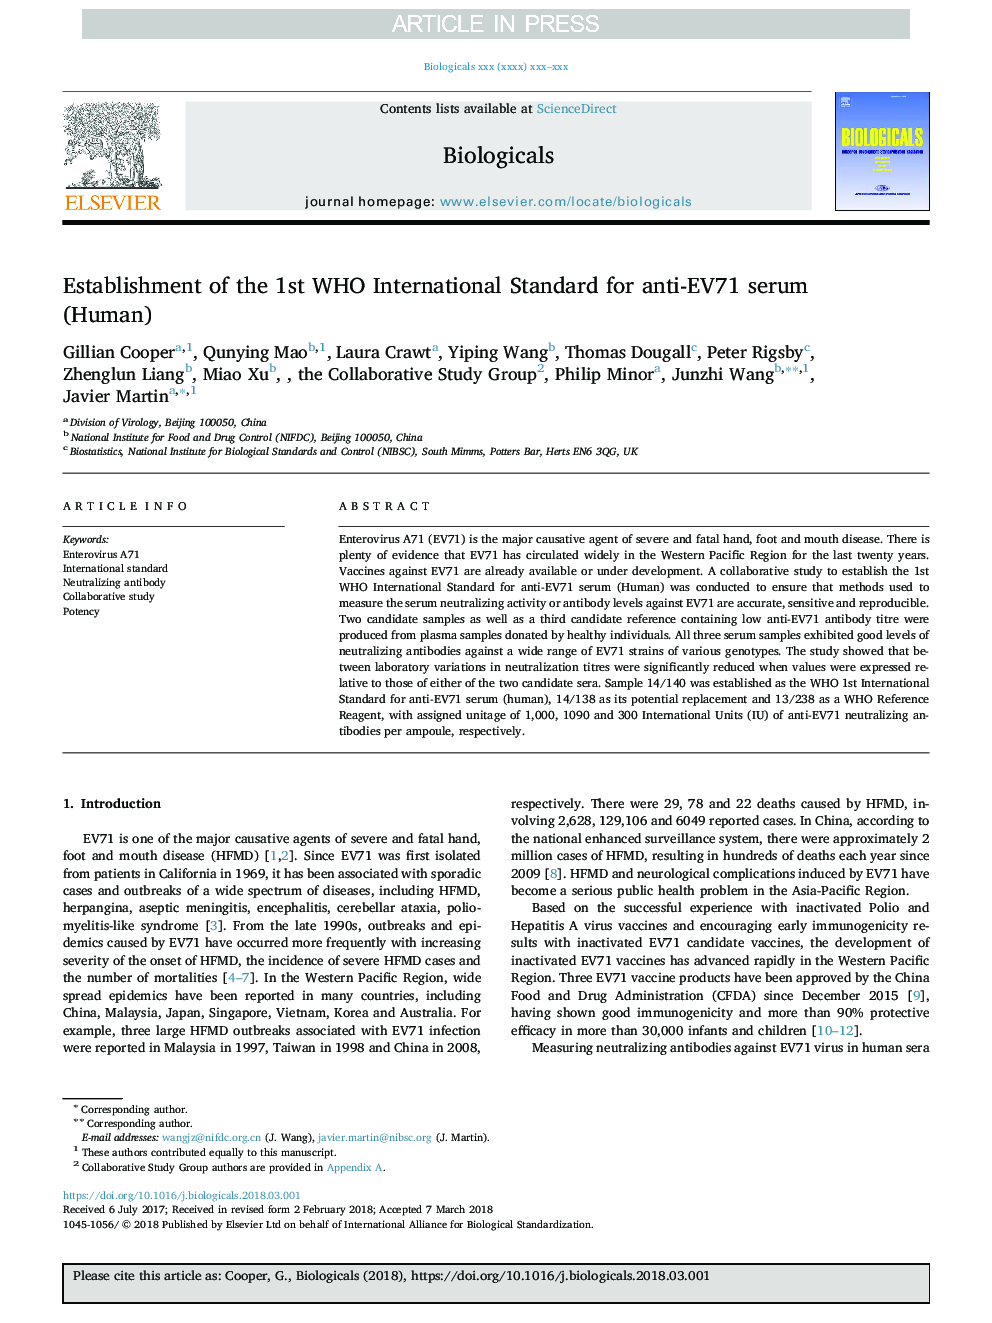 Establishment of the 1st WHO International Standard for anti-EV71 serum (Human)